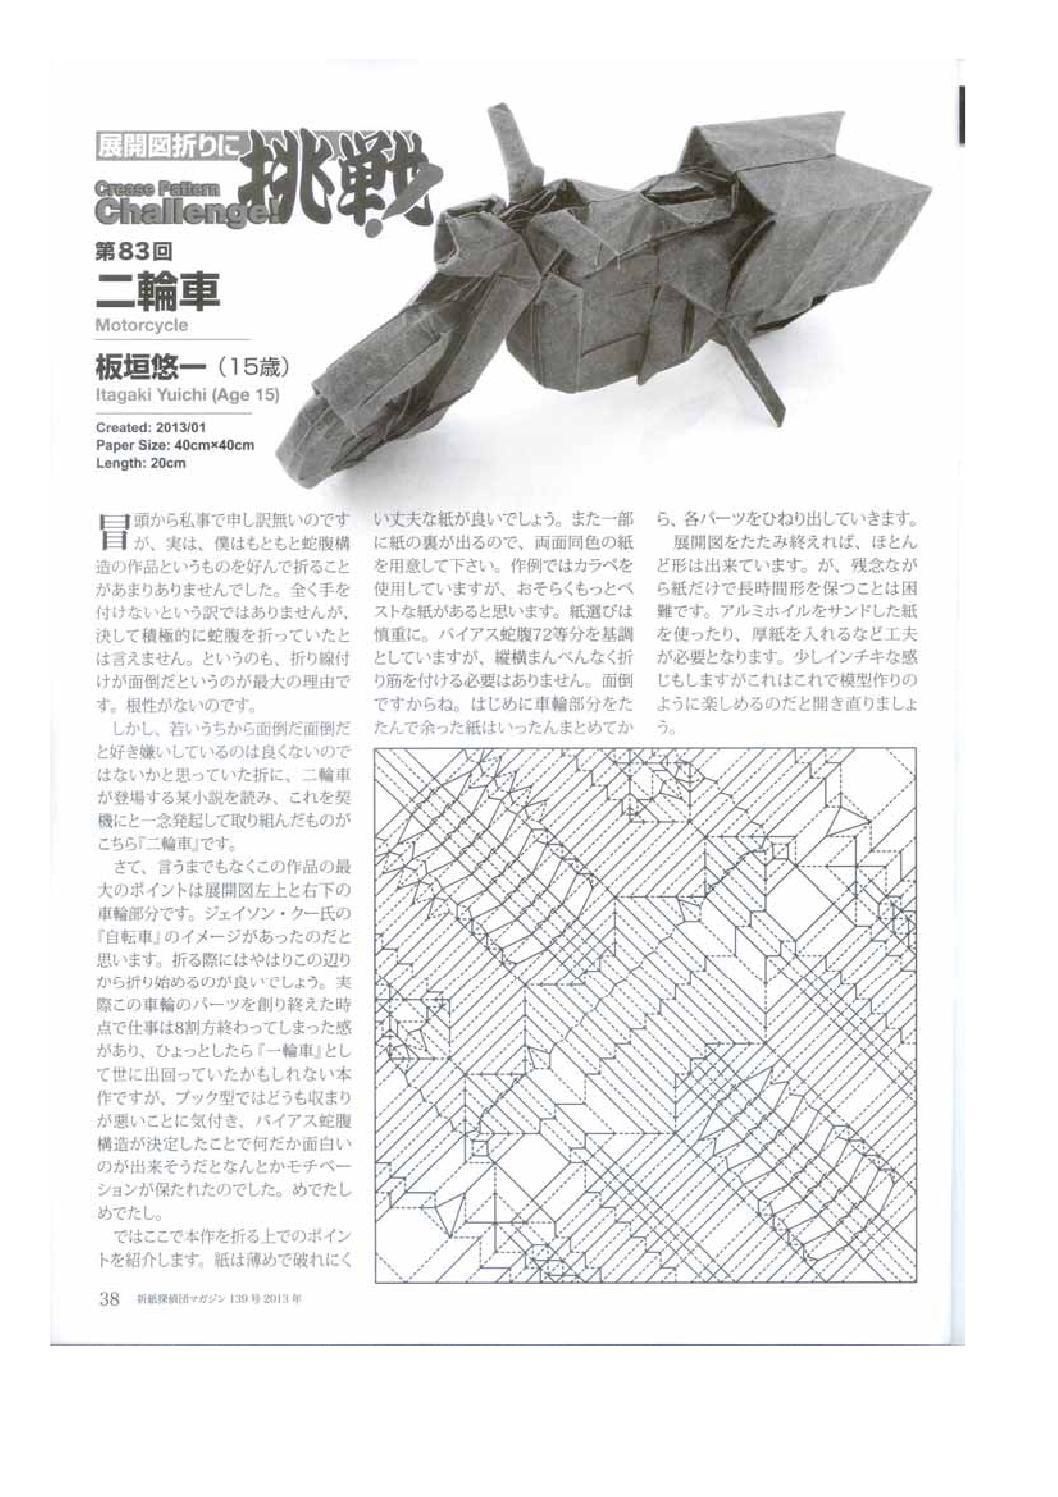 origami tanteidan magazine pdf